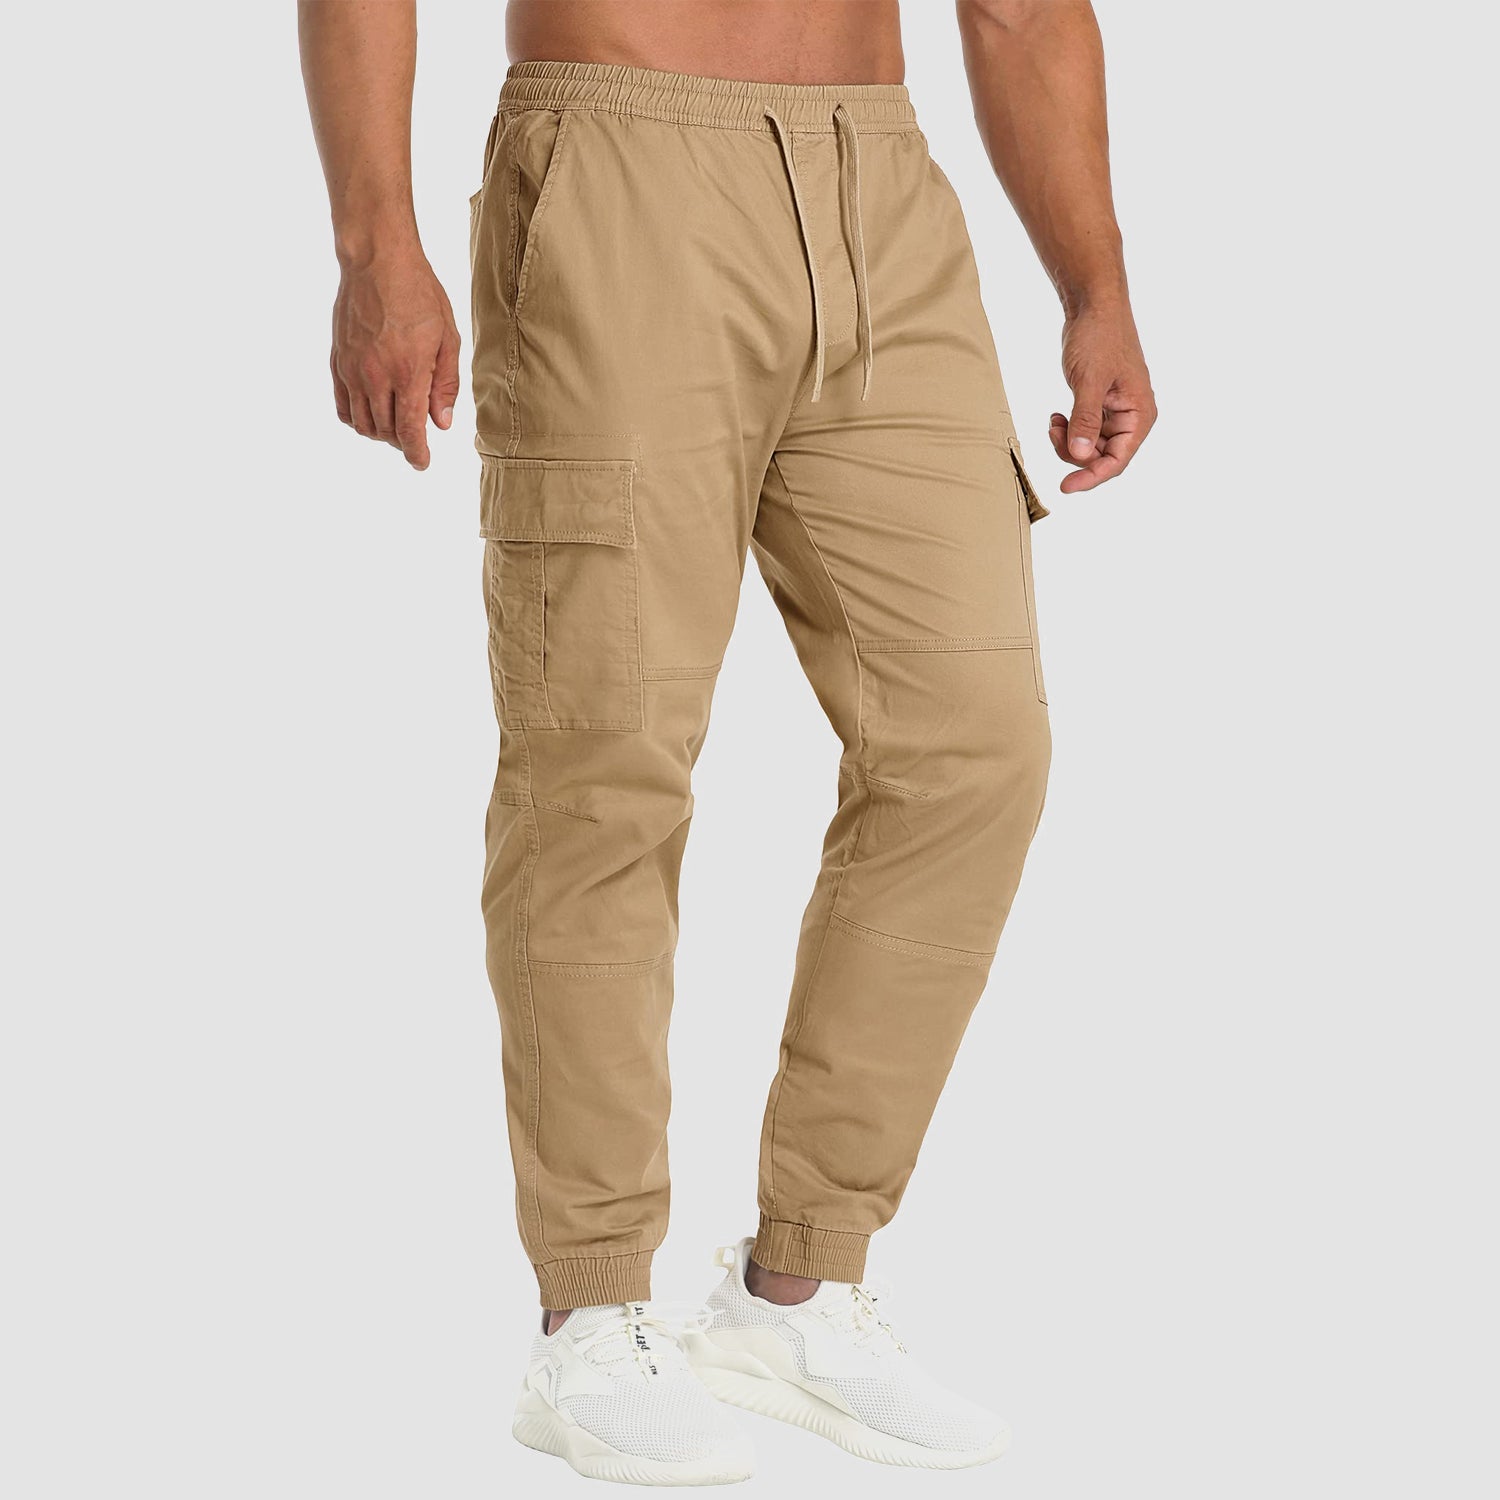 MAGCOMSEN Men's Cargo Pants Elastic Waist Quick Dry Trousers, Khaki / 34